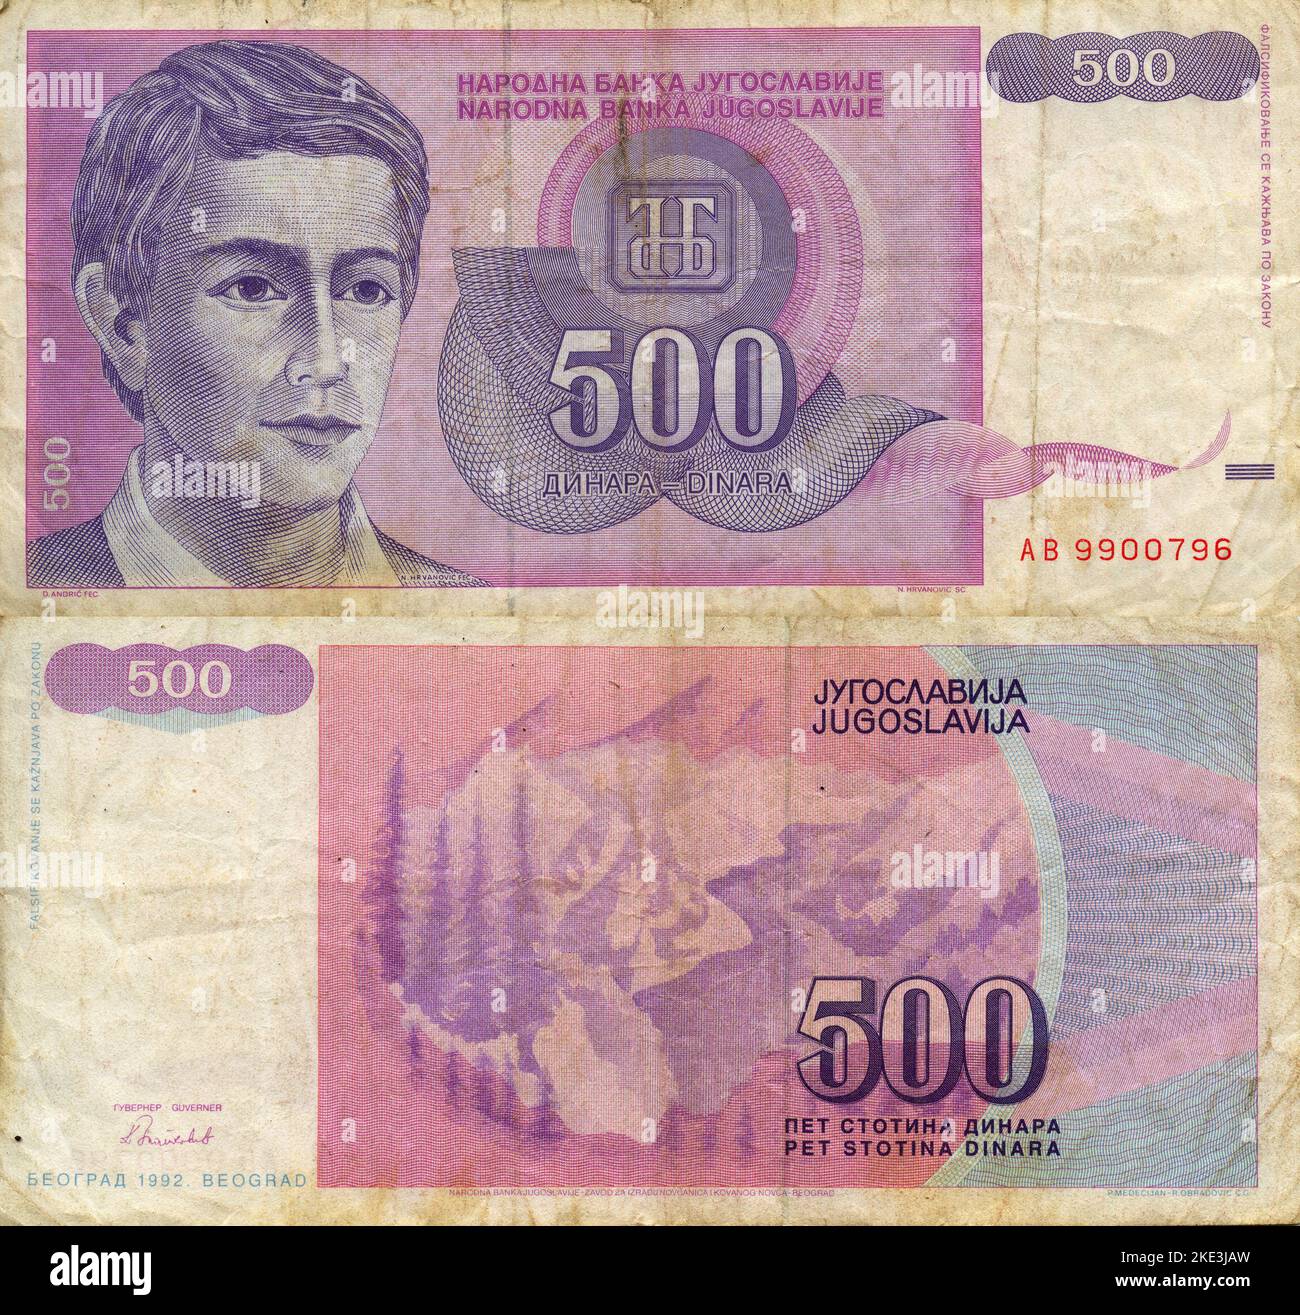 Central Bank of Socialist Federal Republic of Yugoslavia 500 Dinara Banknote, Belgrade 1992 Stock Photo